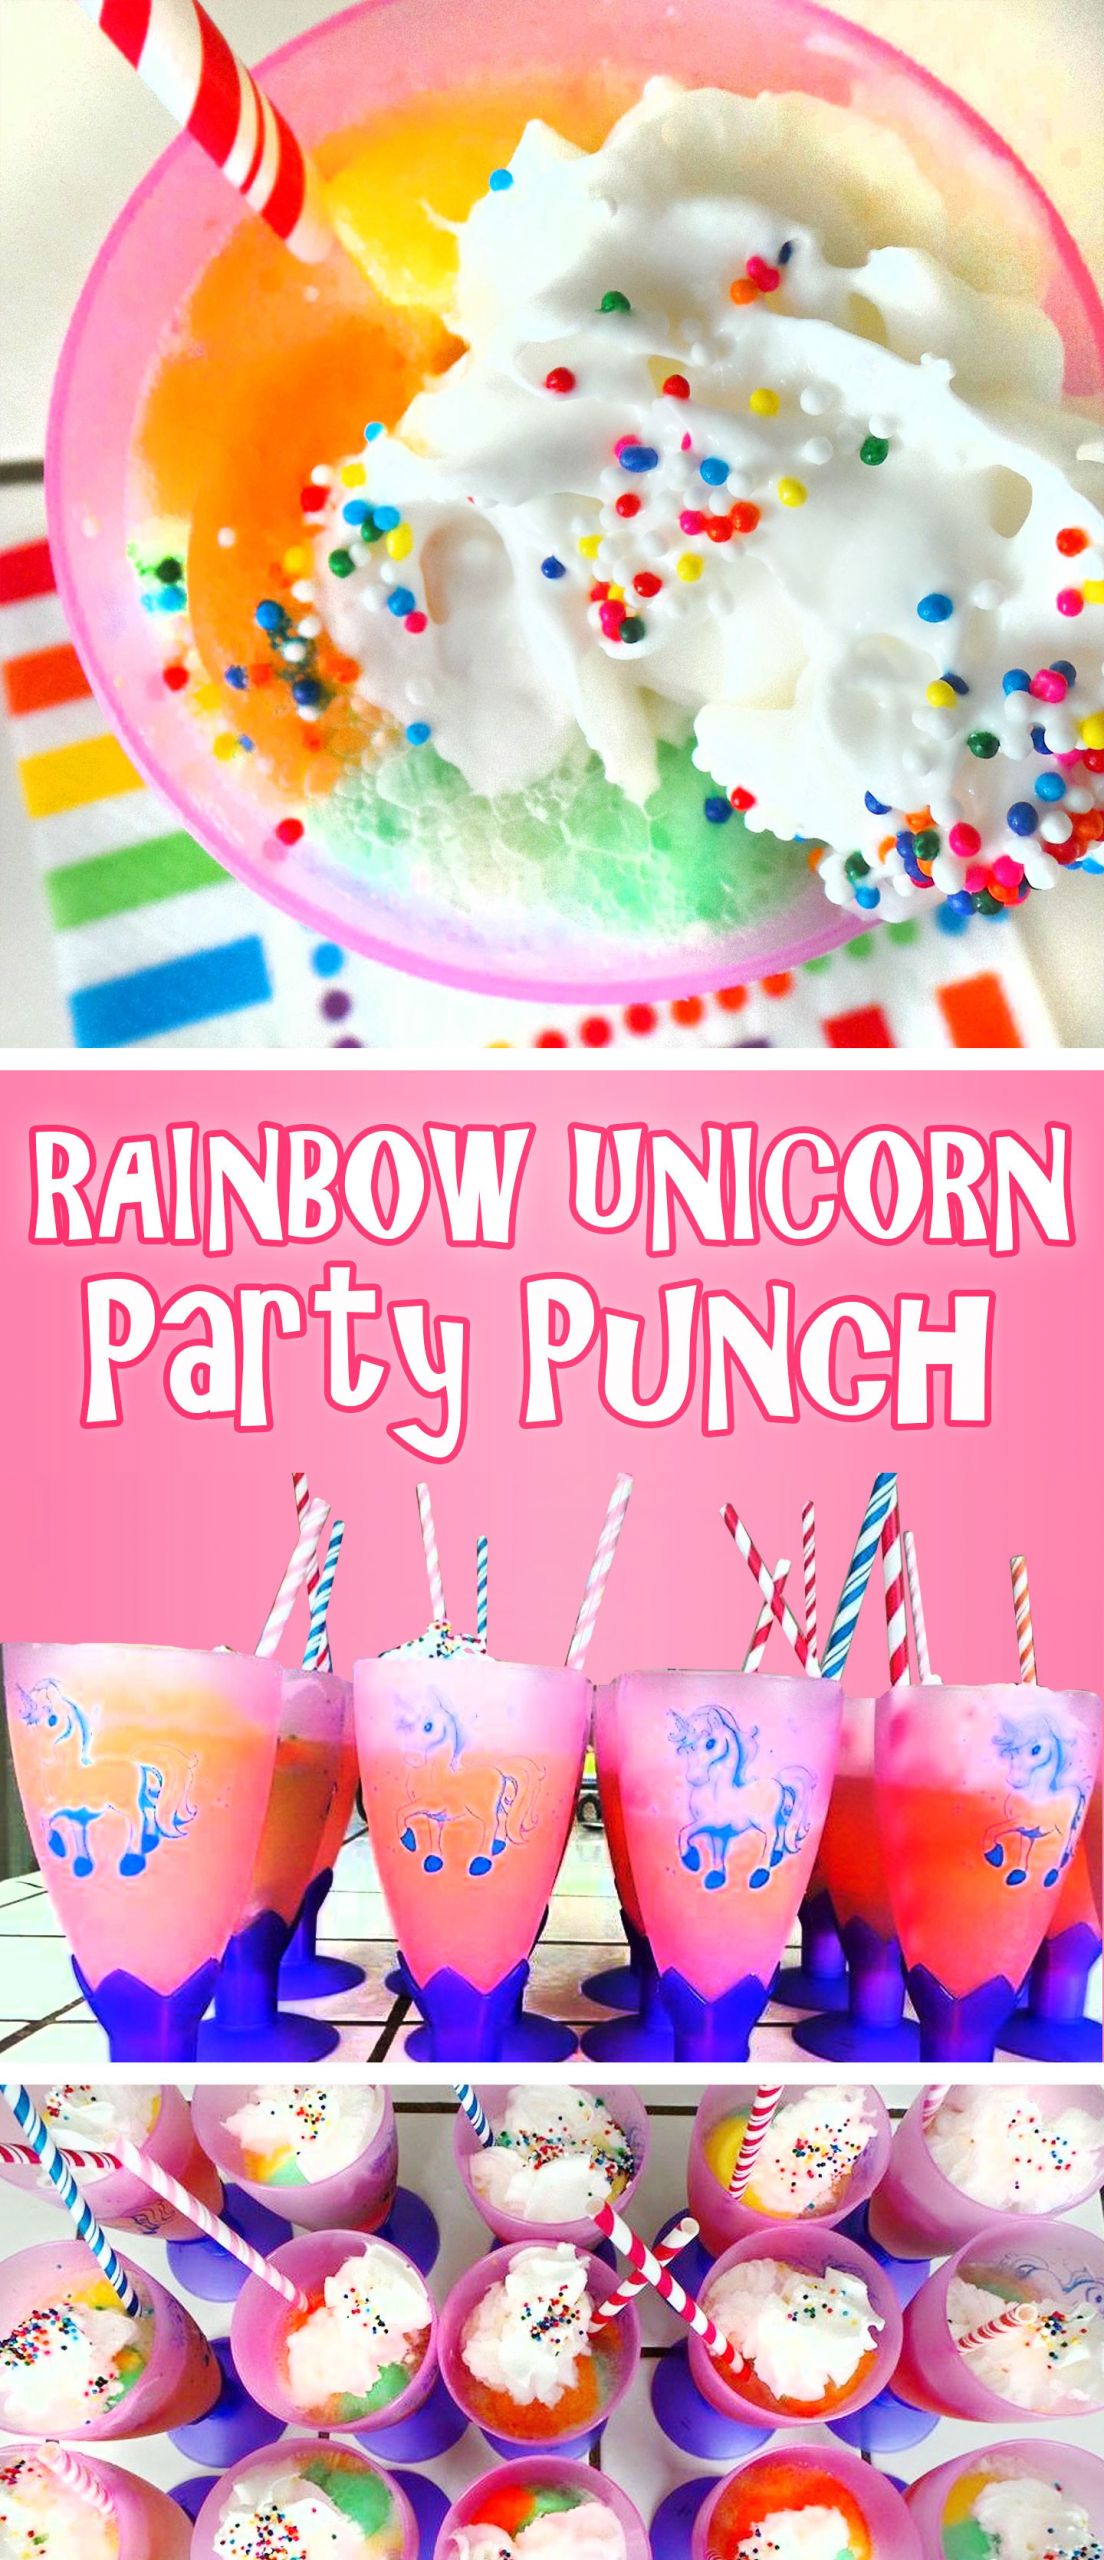 Unicorn Rainbow Party Ideas
 Rainbow Unicorn Party Punch